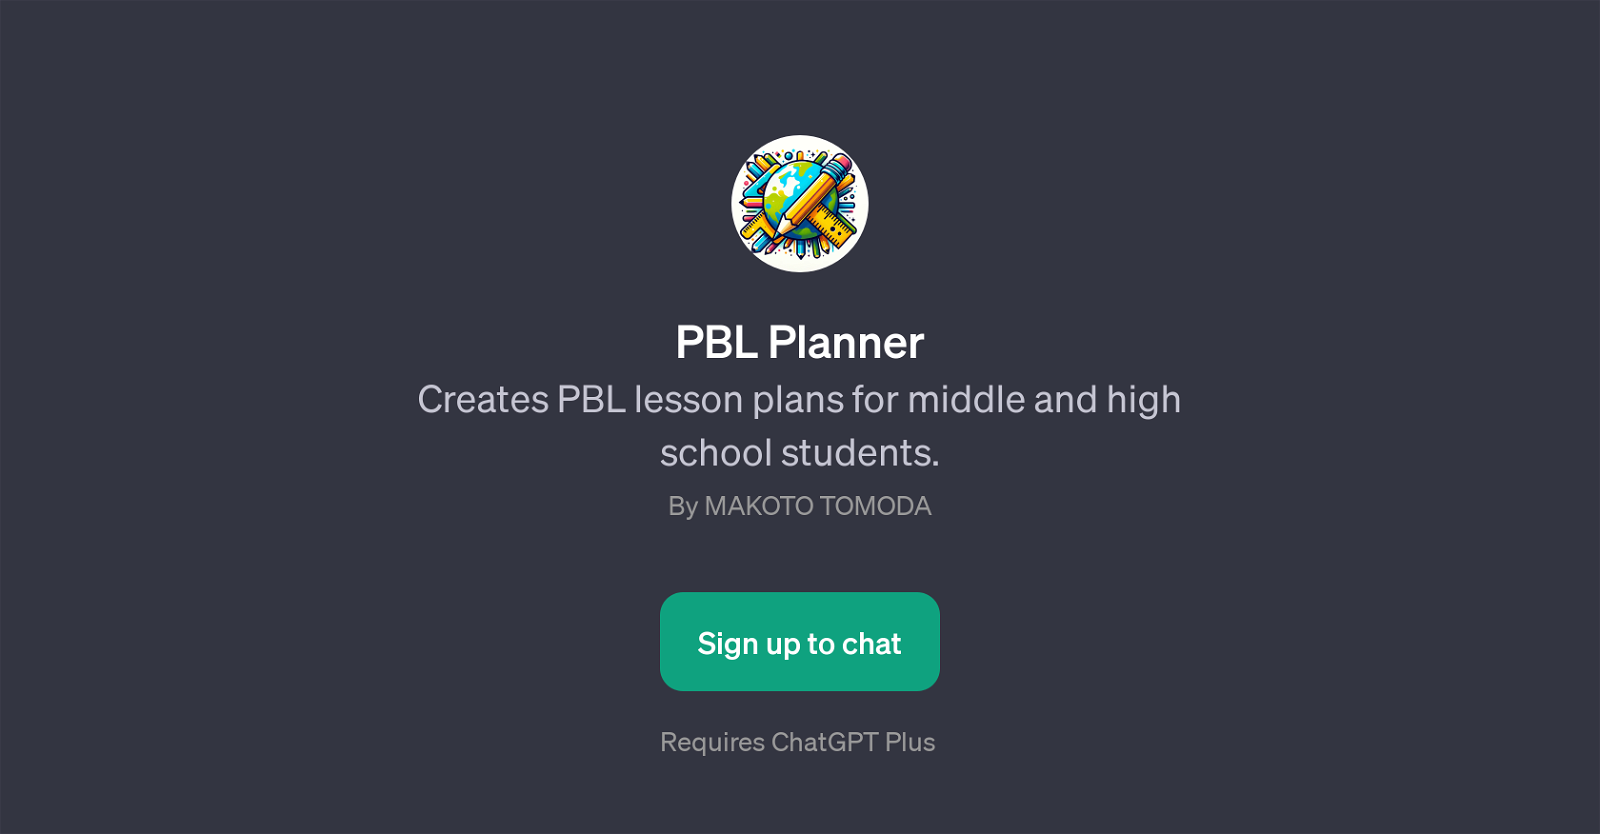 PBL Planner website